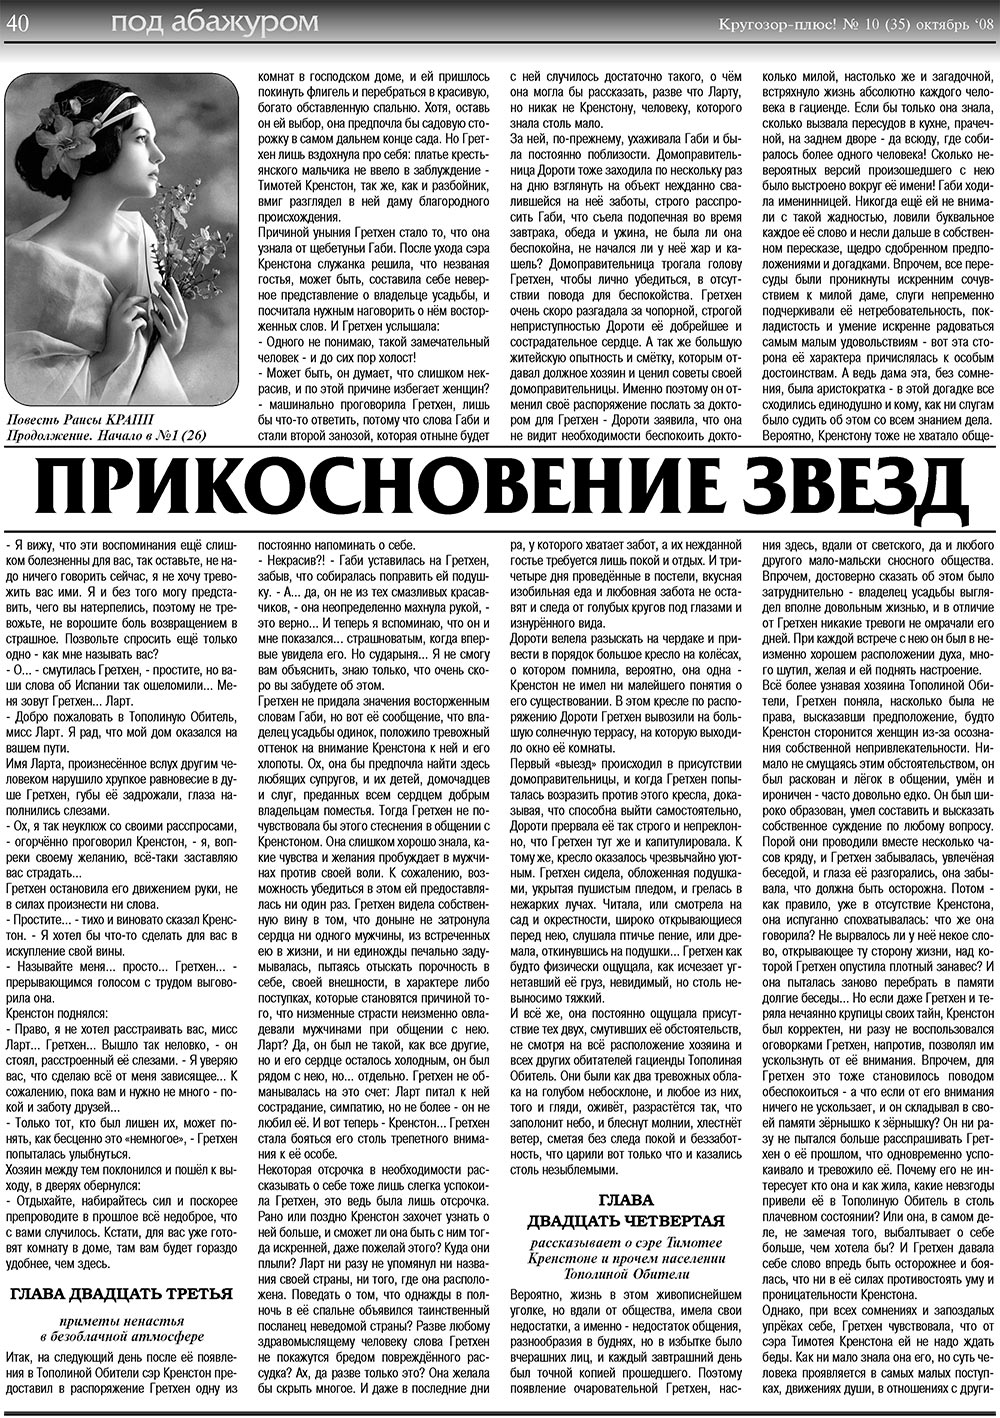 Кругозор плюс! (газета). 2008 год, номер 10, стр. 40